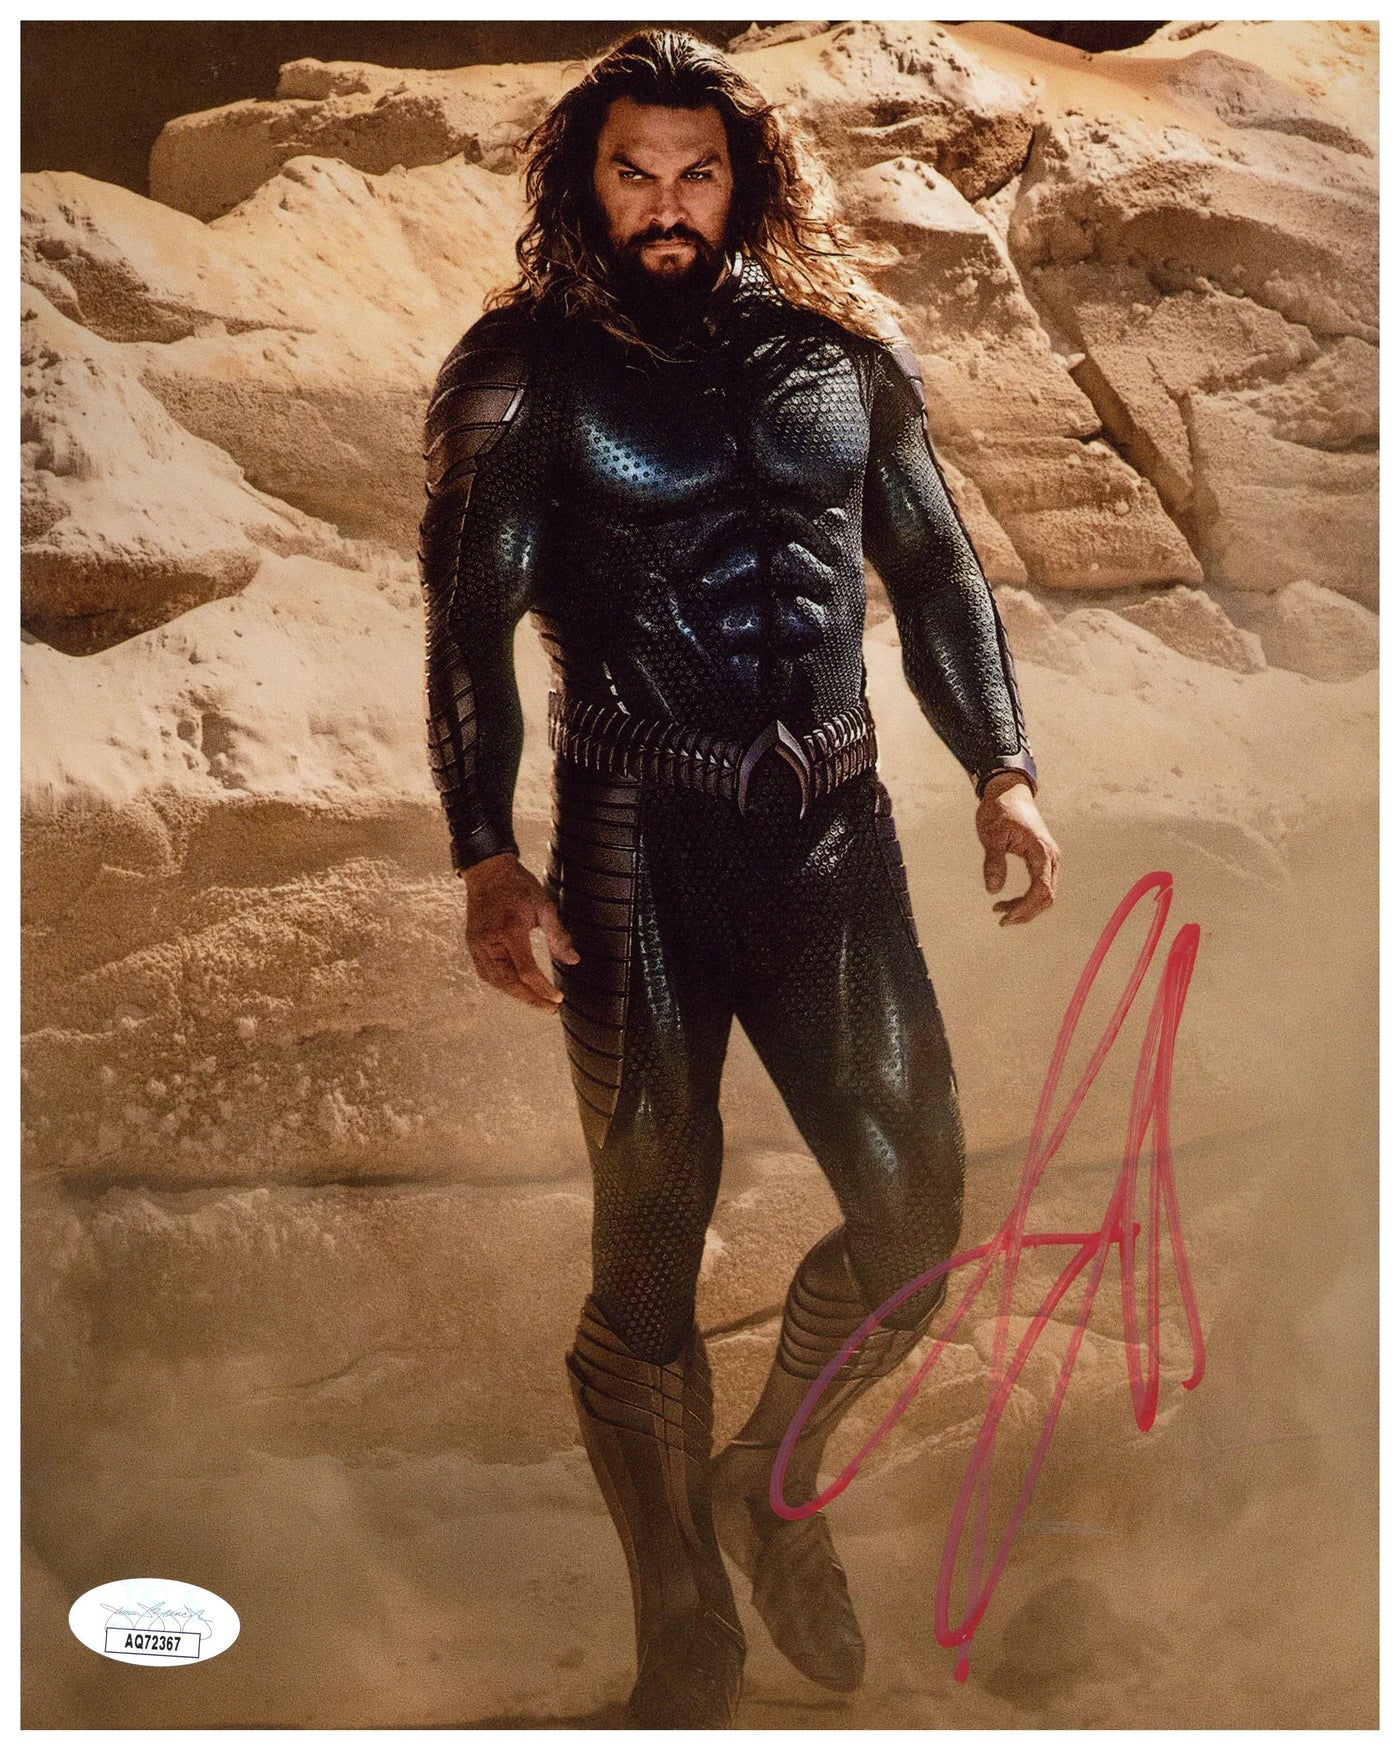 Jason Momoa Signed 8x10 Photo DC Aquaman Autographed JSA COA #2